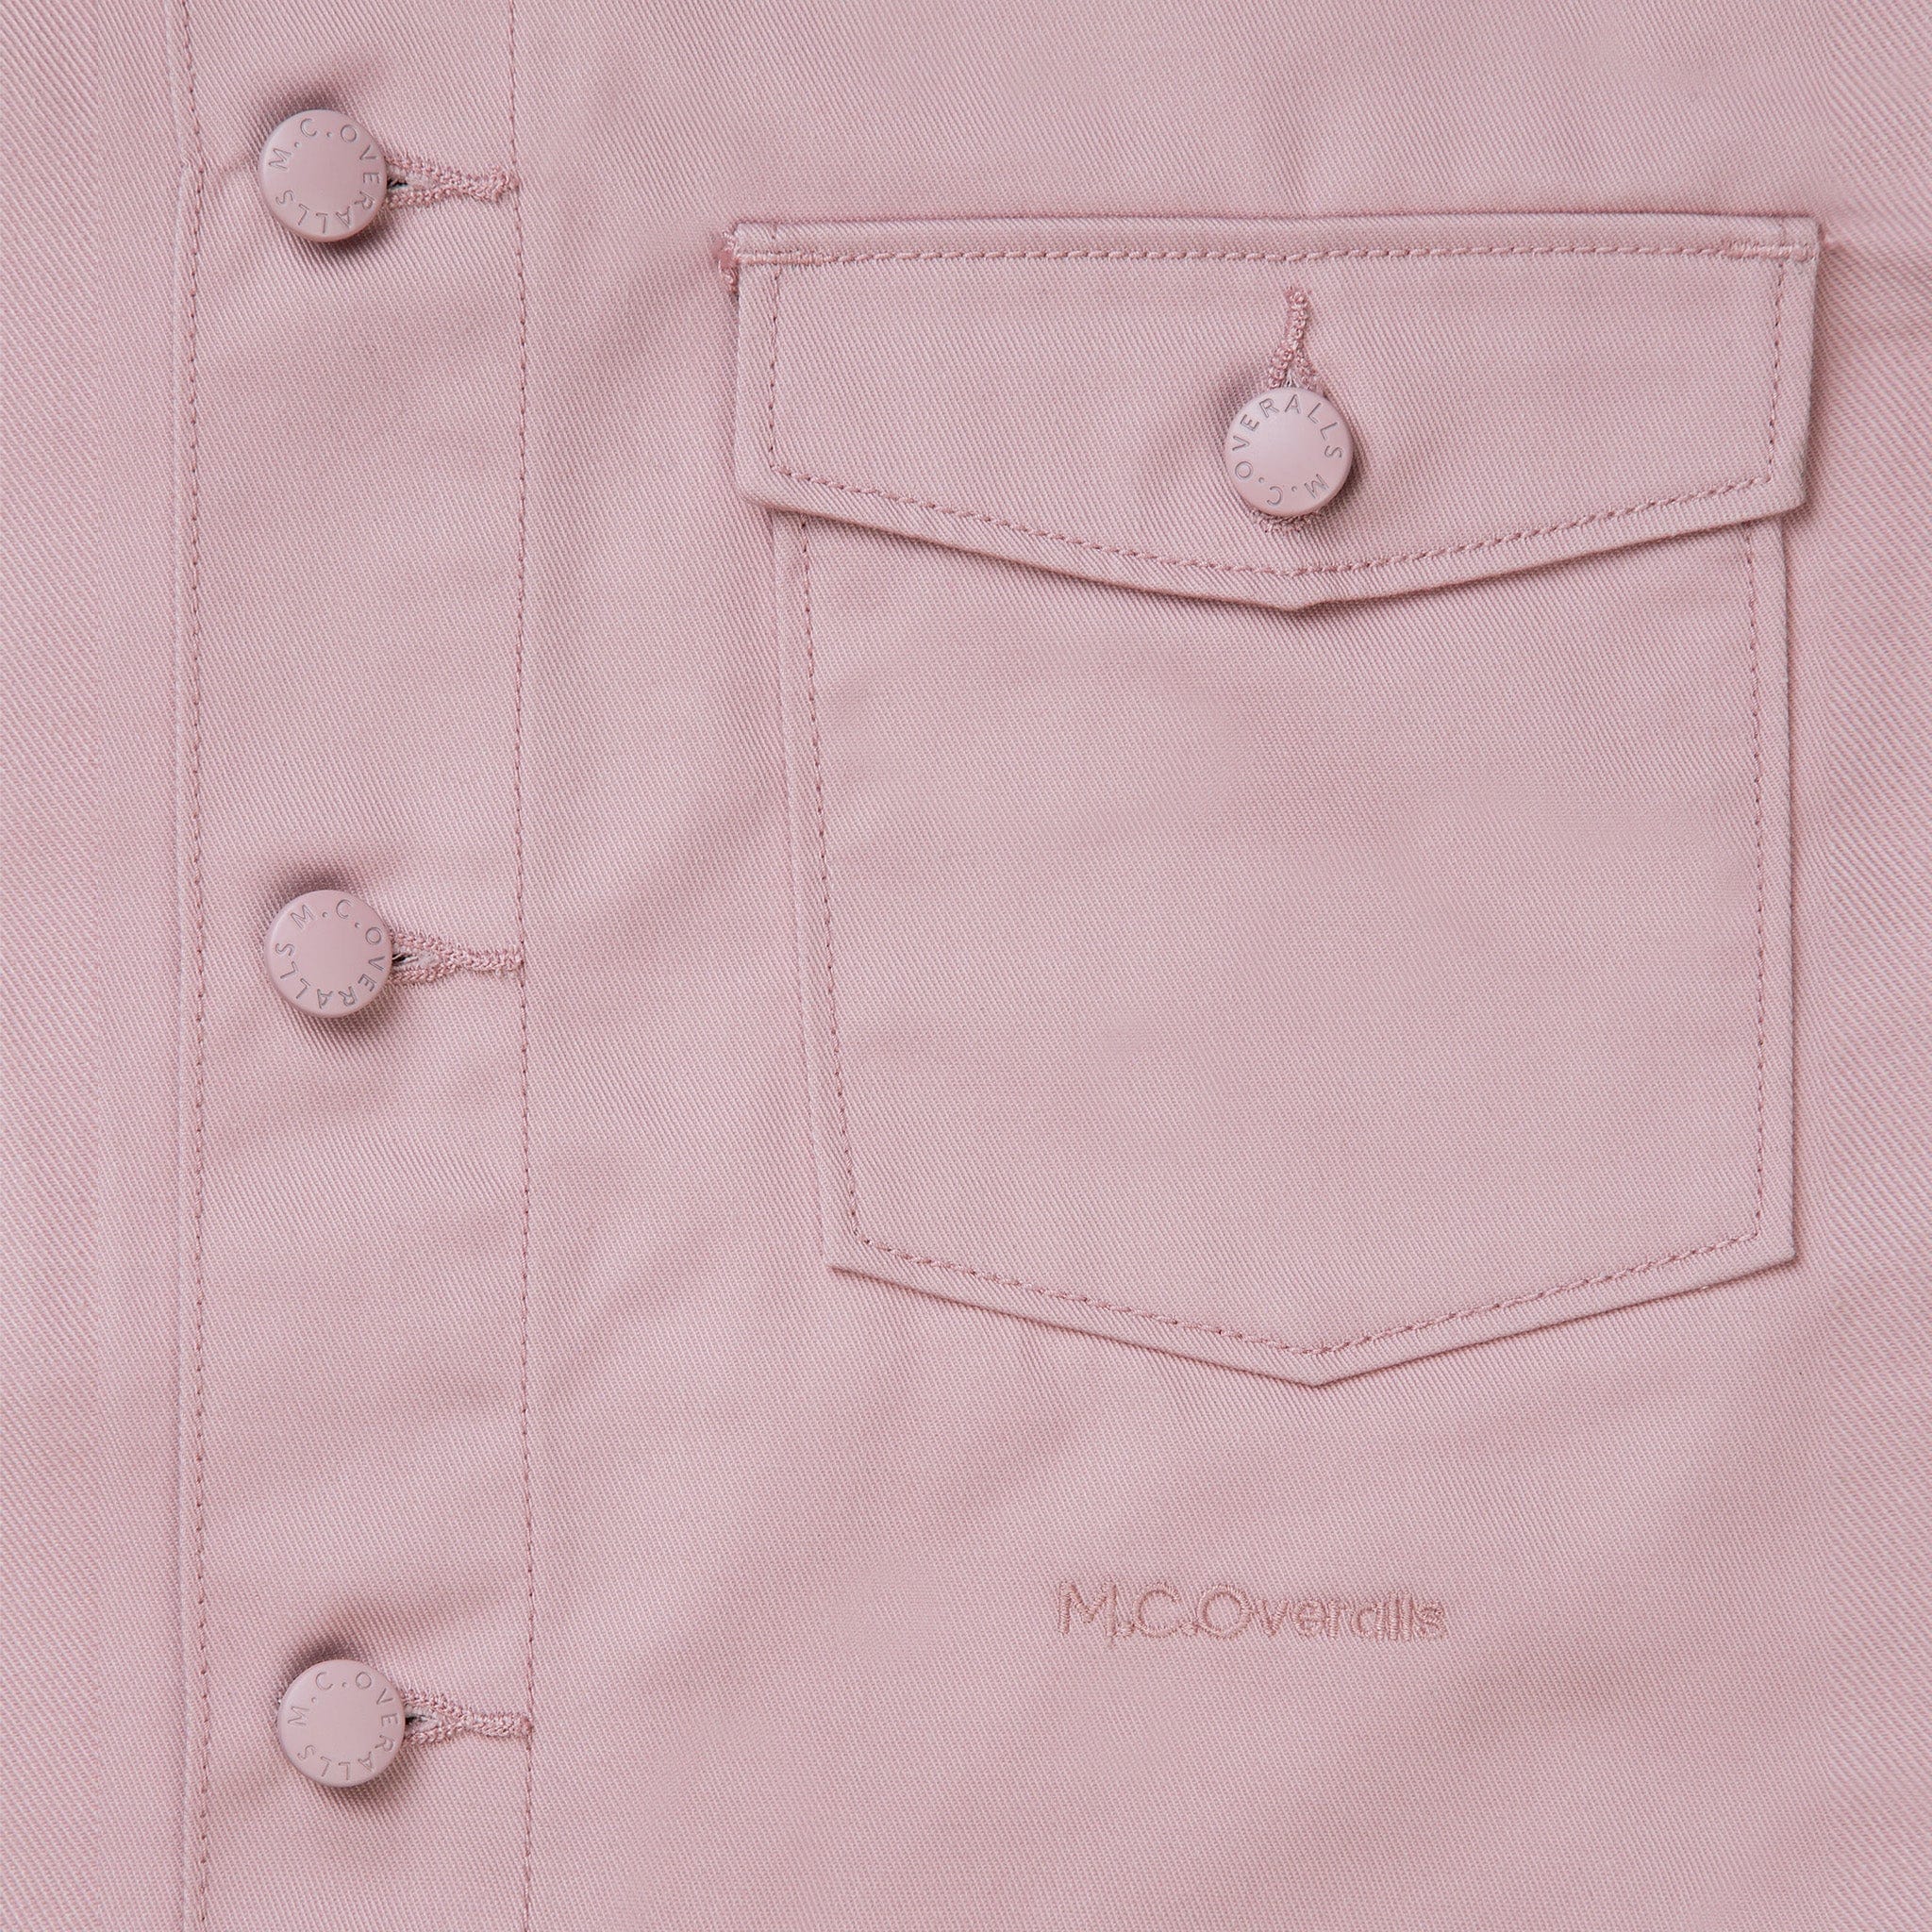 Logo of M.C.Overalls Placed Below the Pocket of Premium Pink Work Jacket.